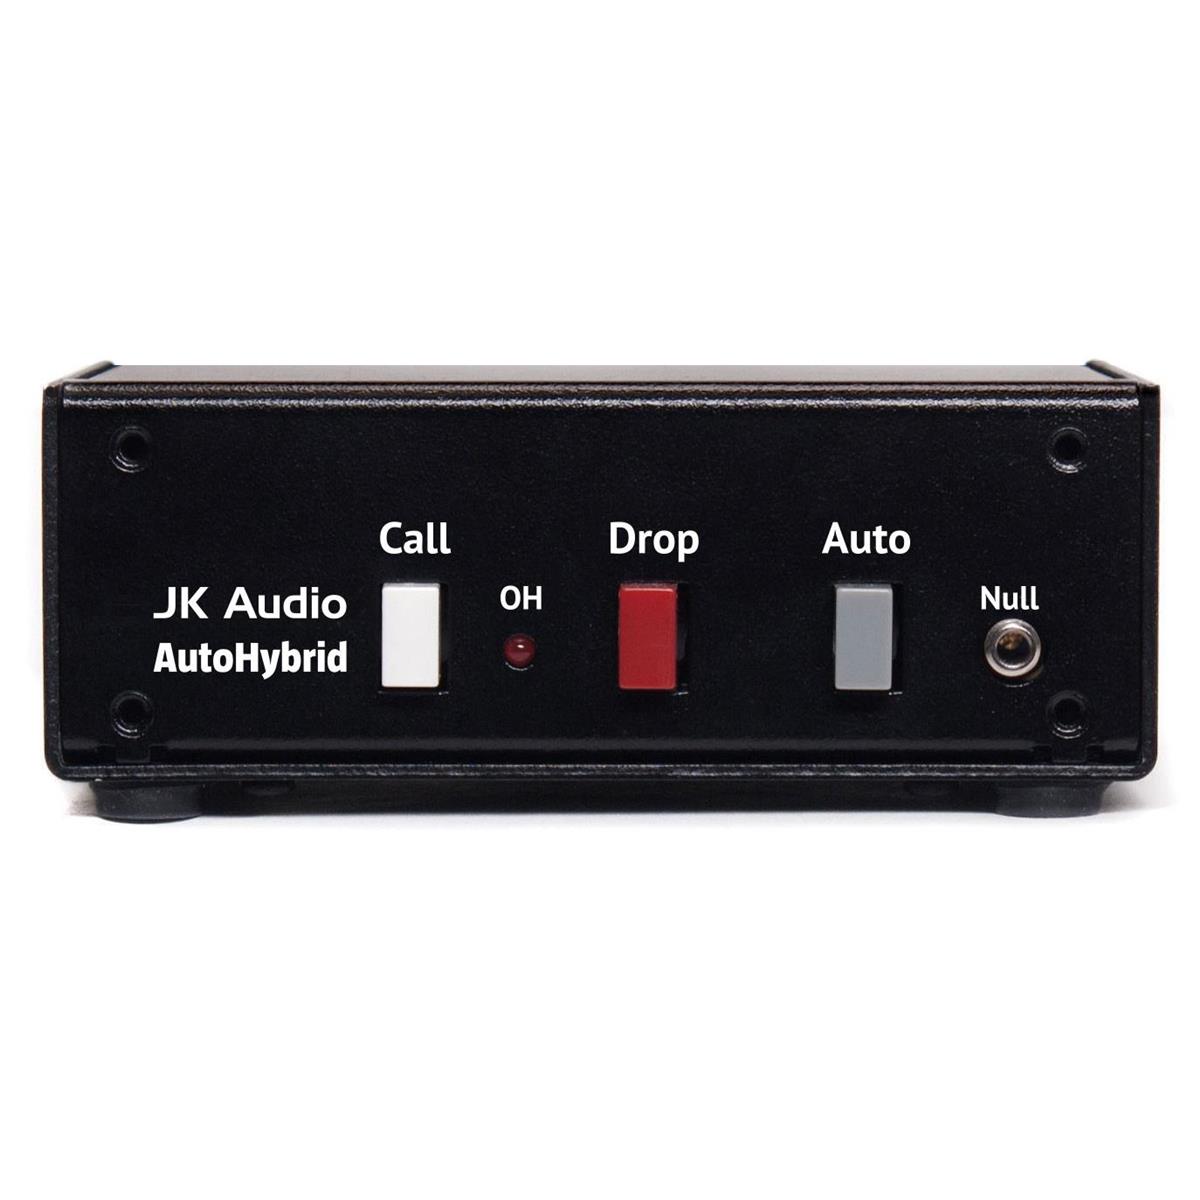 Image of Jinbei Jk Audio AutoHybrid Full Duplex Auto Answer Telephone Audio Interface